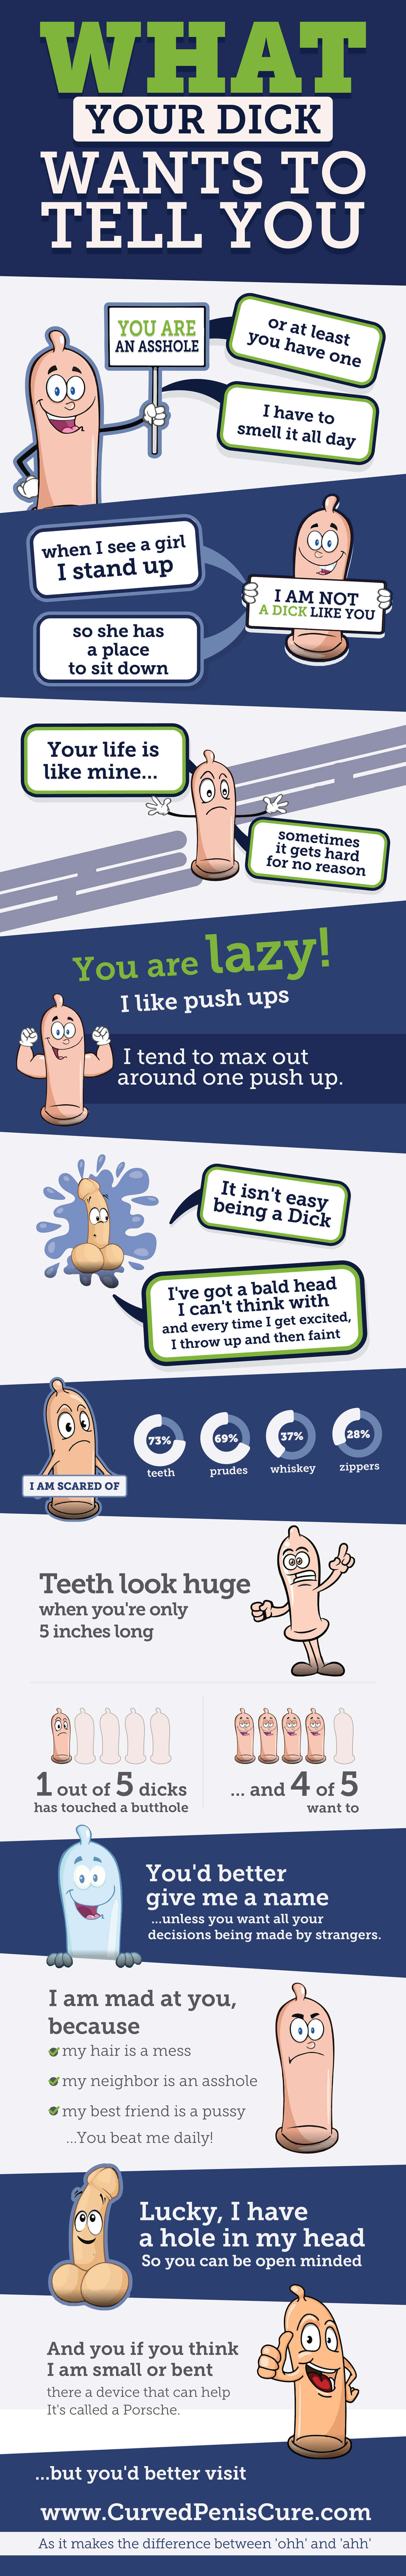 small-dick-jokes-infographic